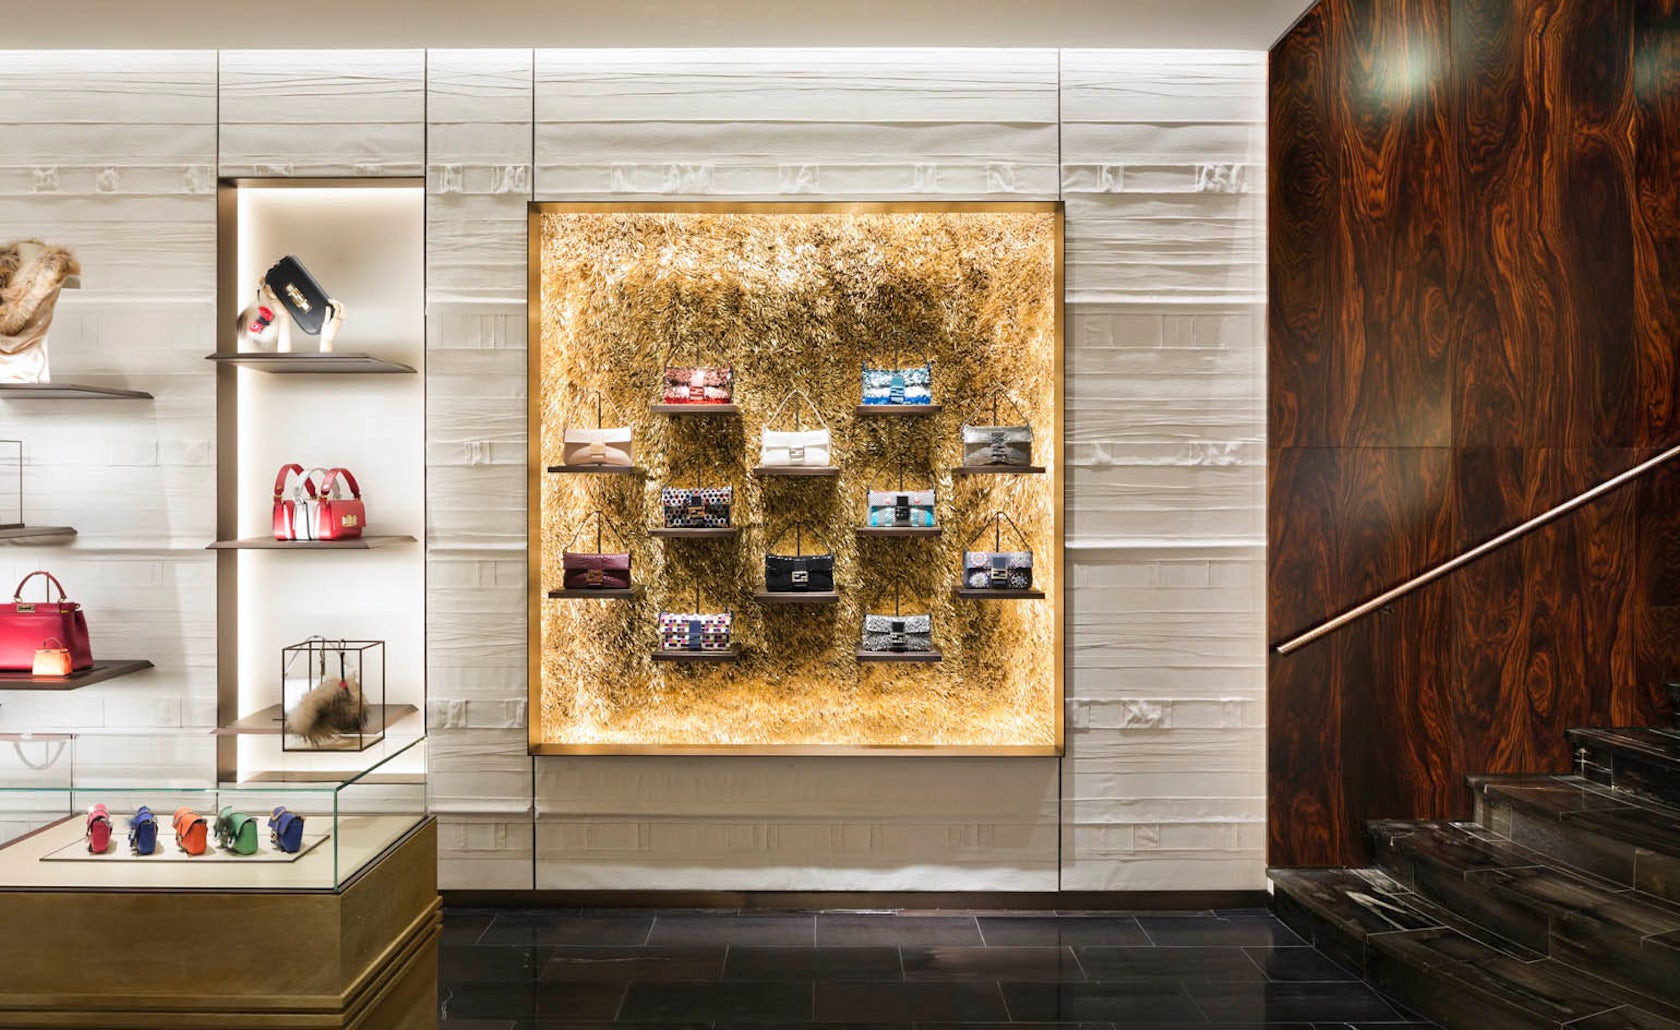 Peter Marino Designs the New Fendi Boutique in New York City